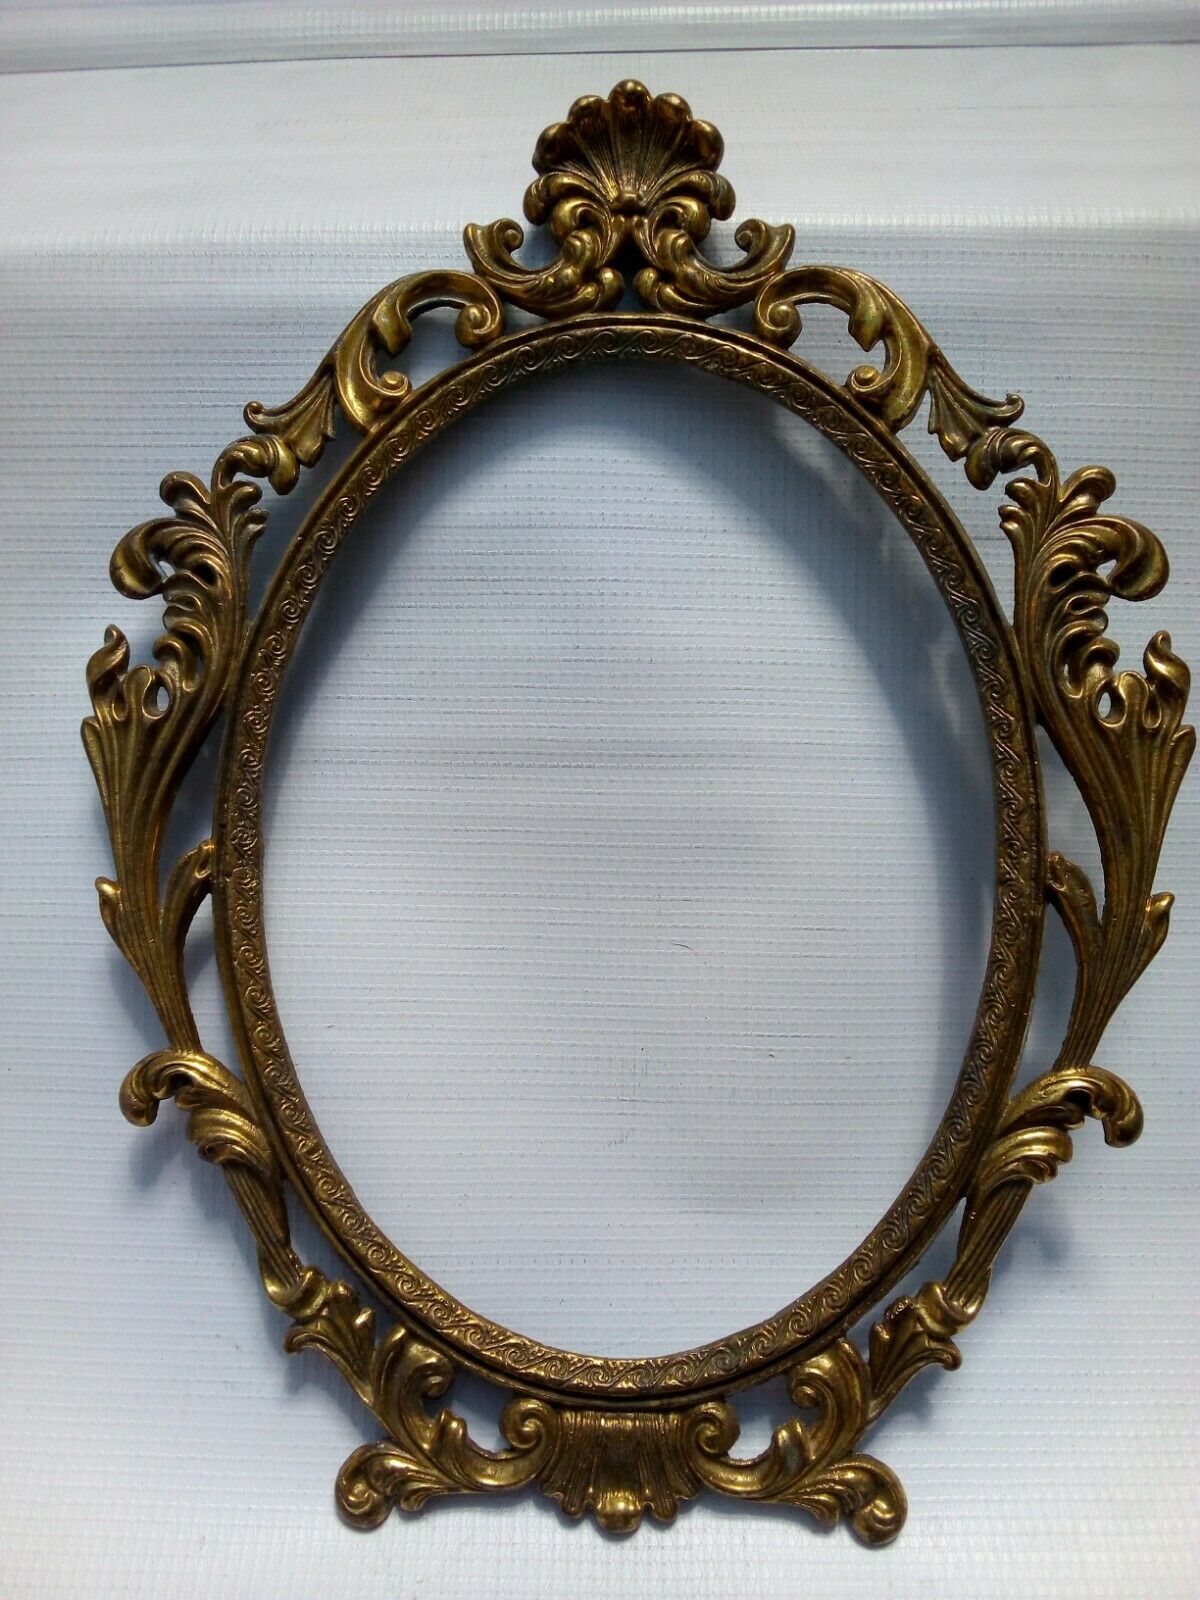 Antique Ornate Gold Decorative Frame/Bronze Gilt - photo frame or MIRROR